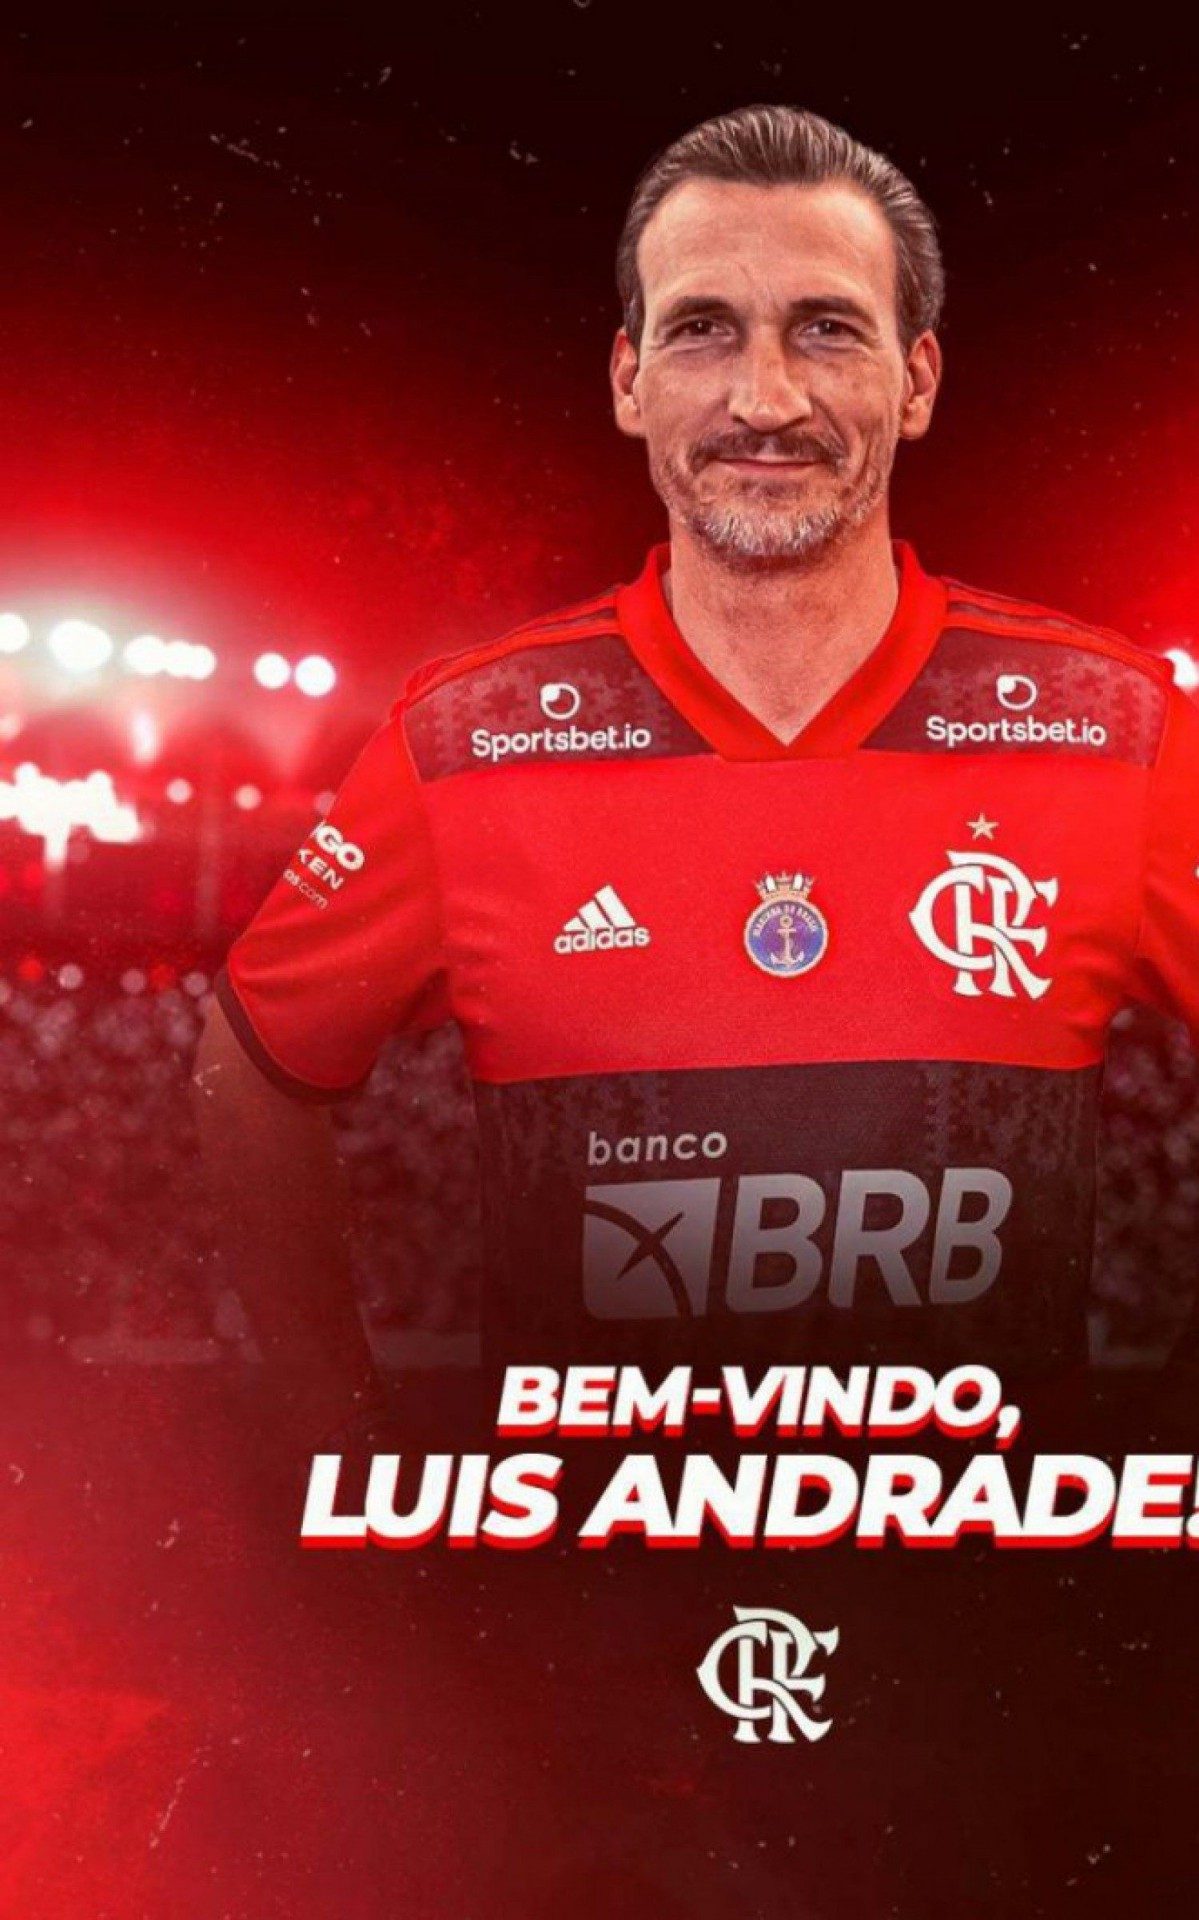 Luís Andrade